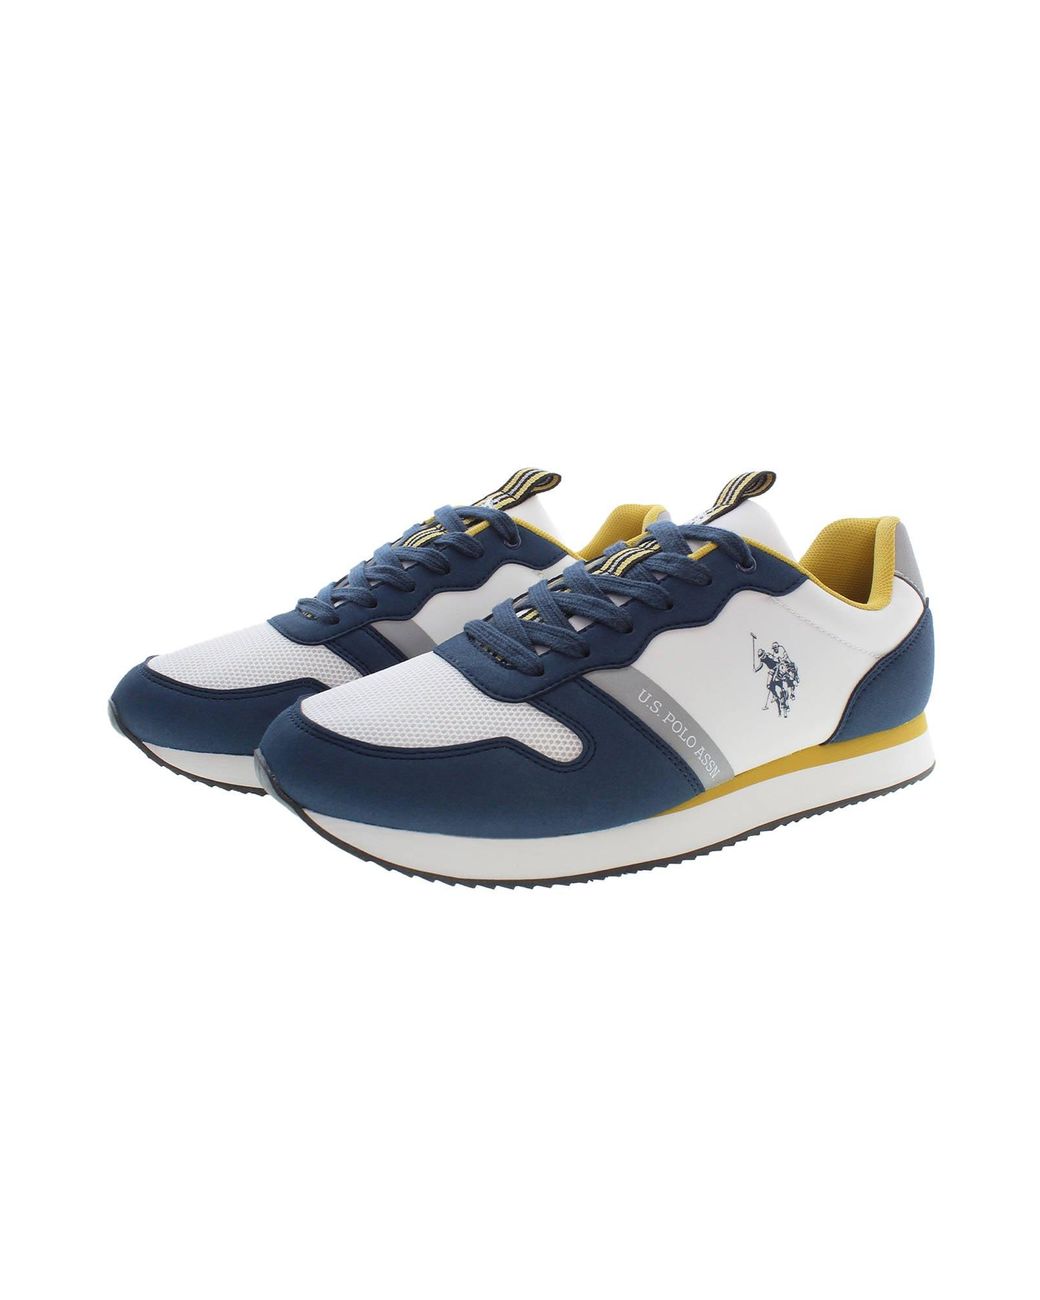 U.S. POLO ASSN. Polyester Sneaker in Blue for Men | Lyst